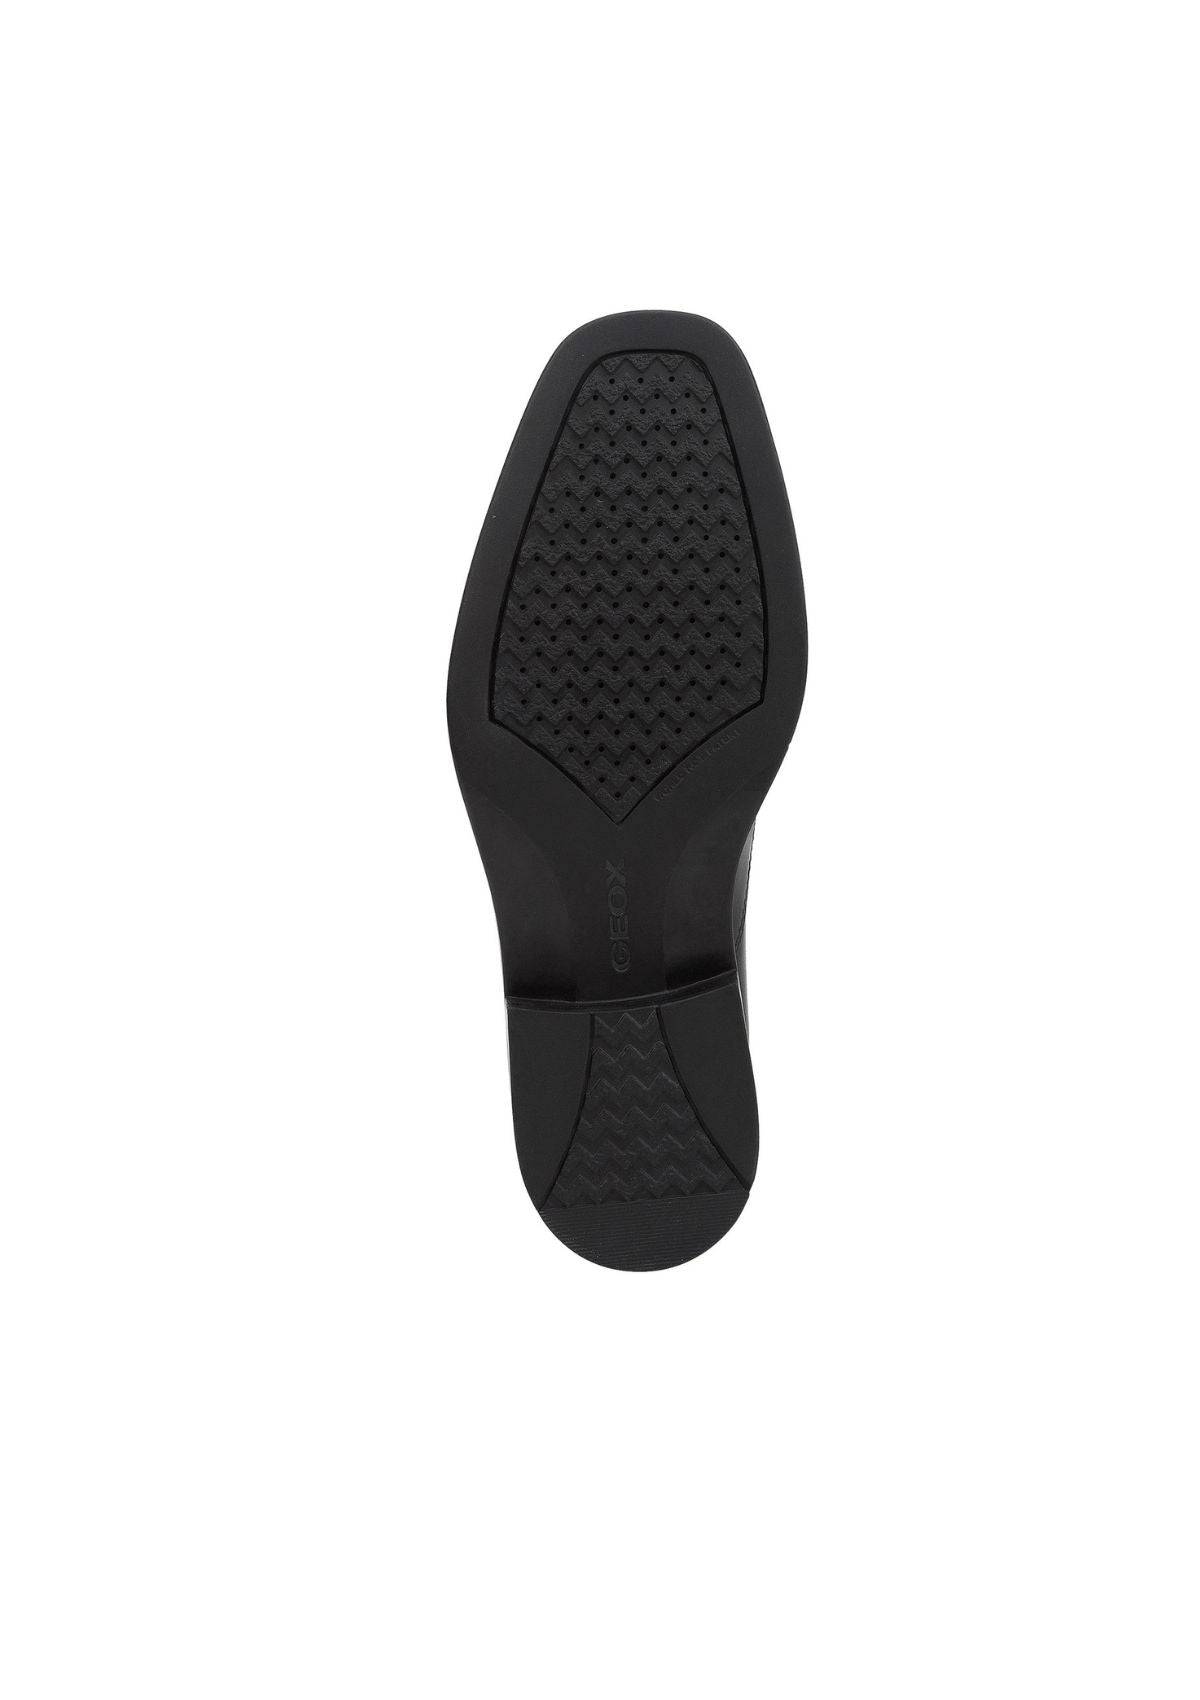 Geox Men Shoes BRANDOFF Slip-On Black sole